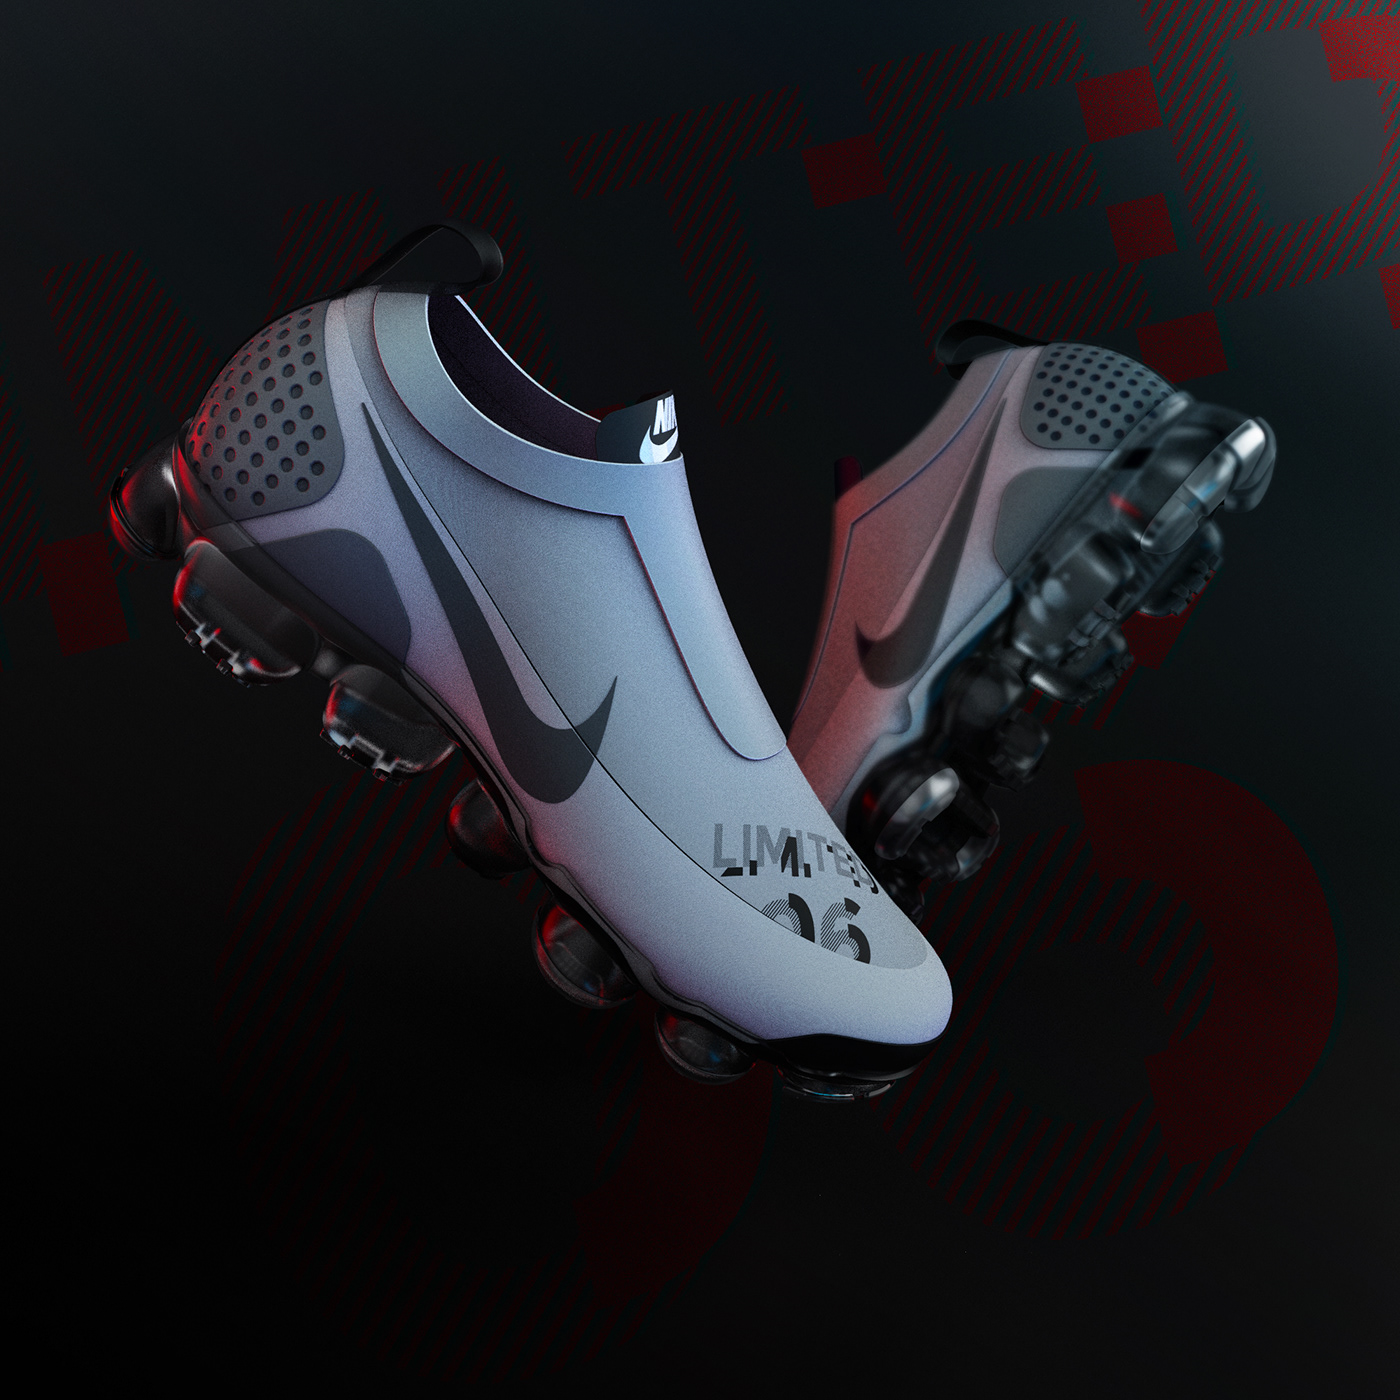 Nike productdesign . design industrialdesign vapormax keyshot Keyshot8 Render